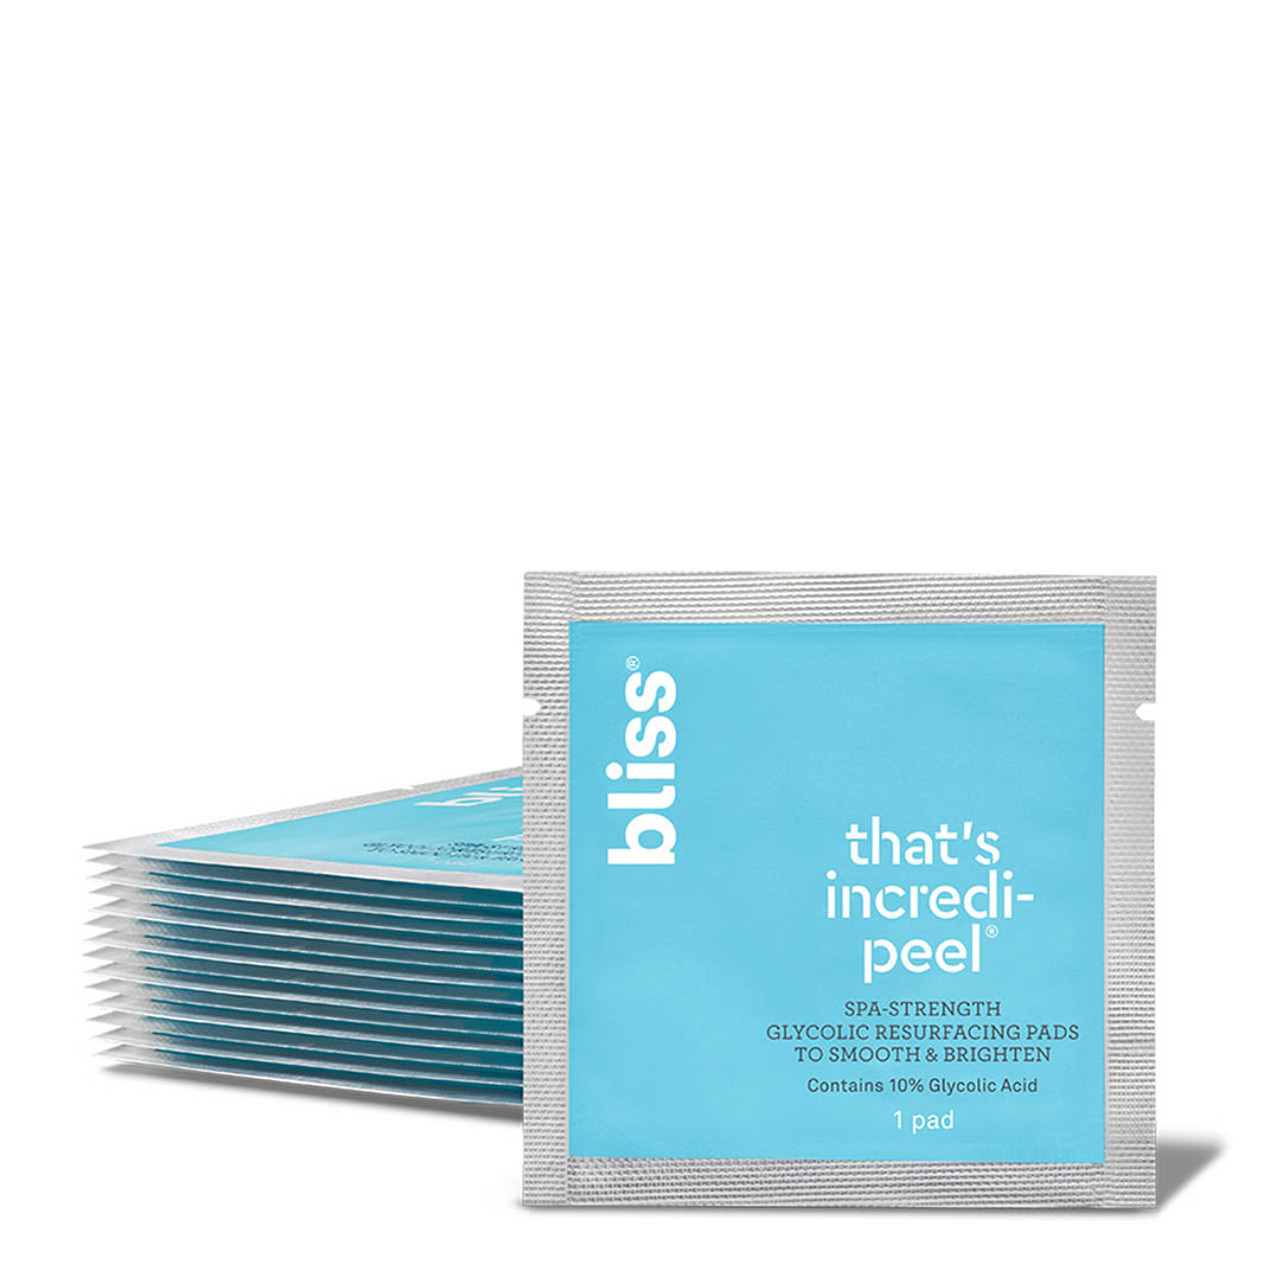 Bliss - That's Incredi-peel Glycolic Resurfacing Pads